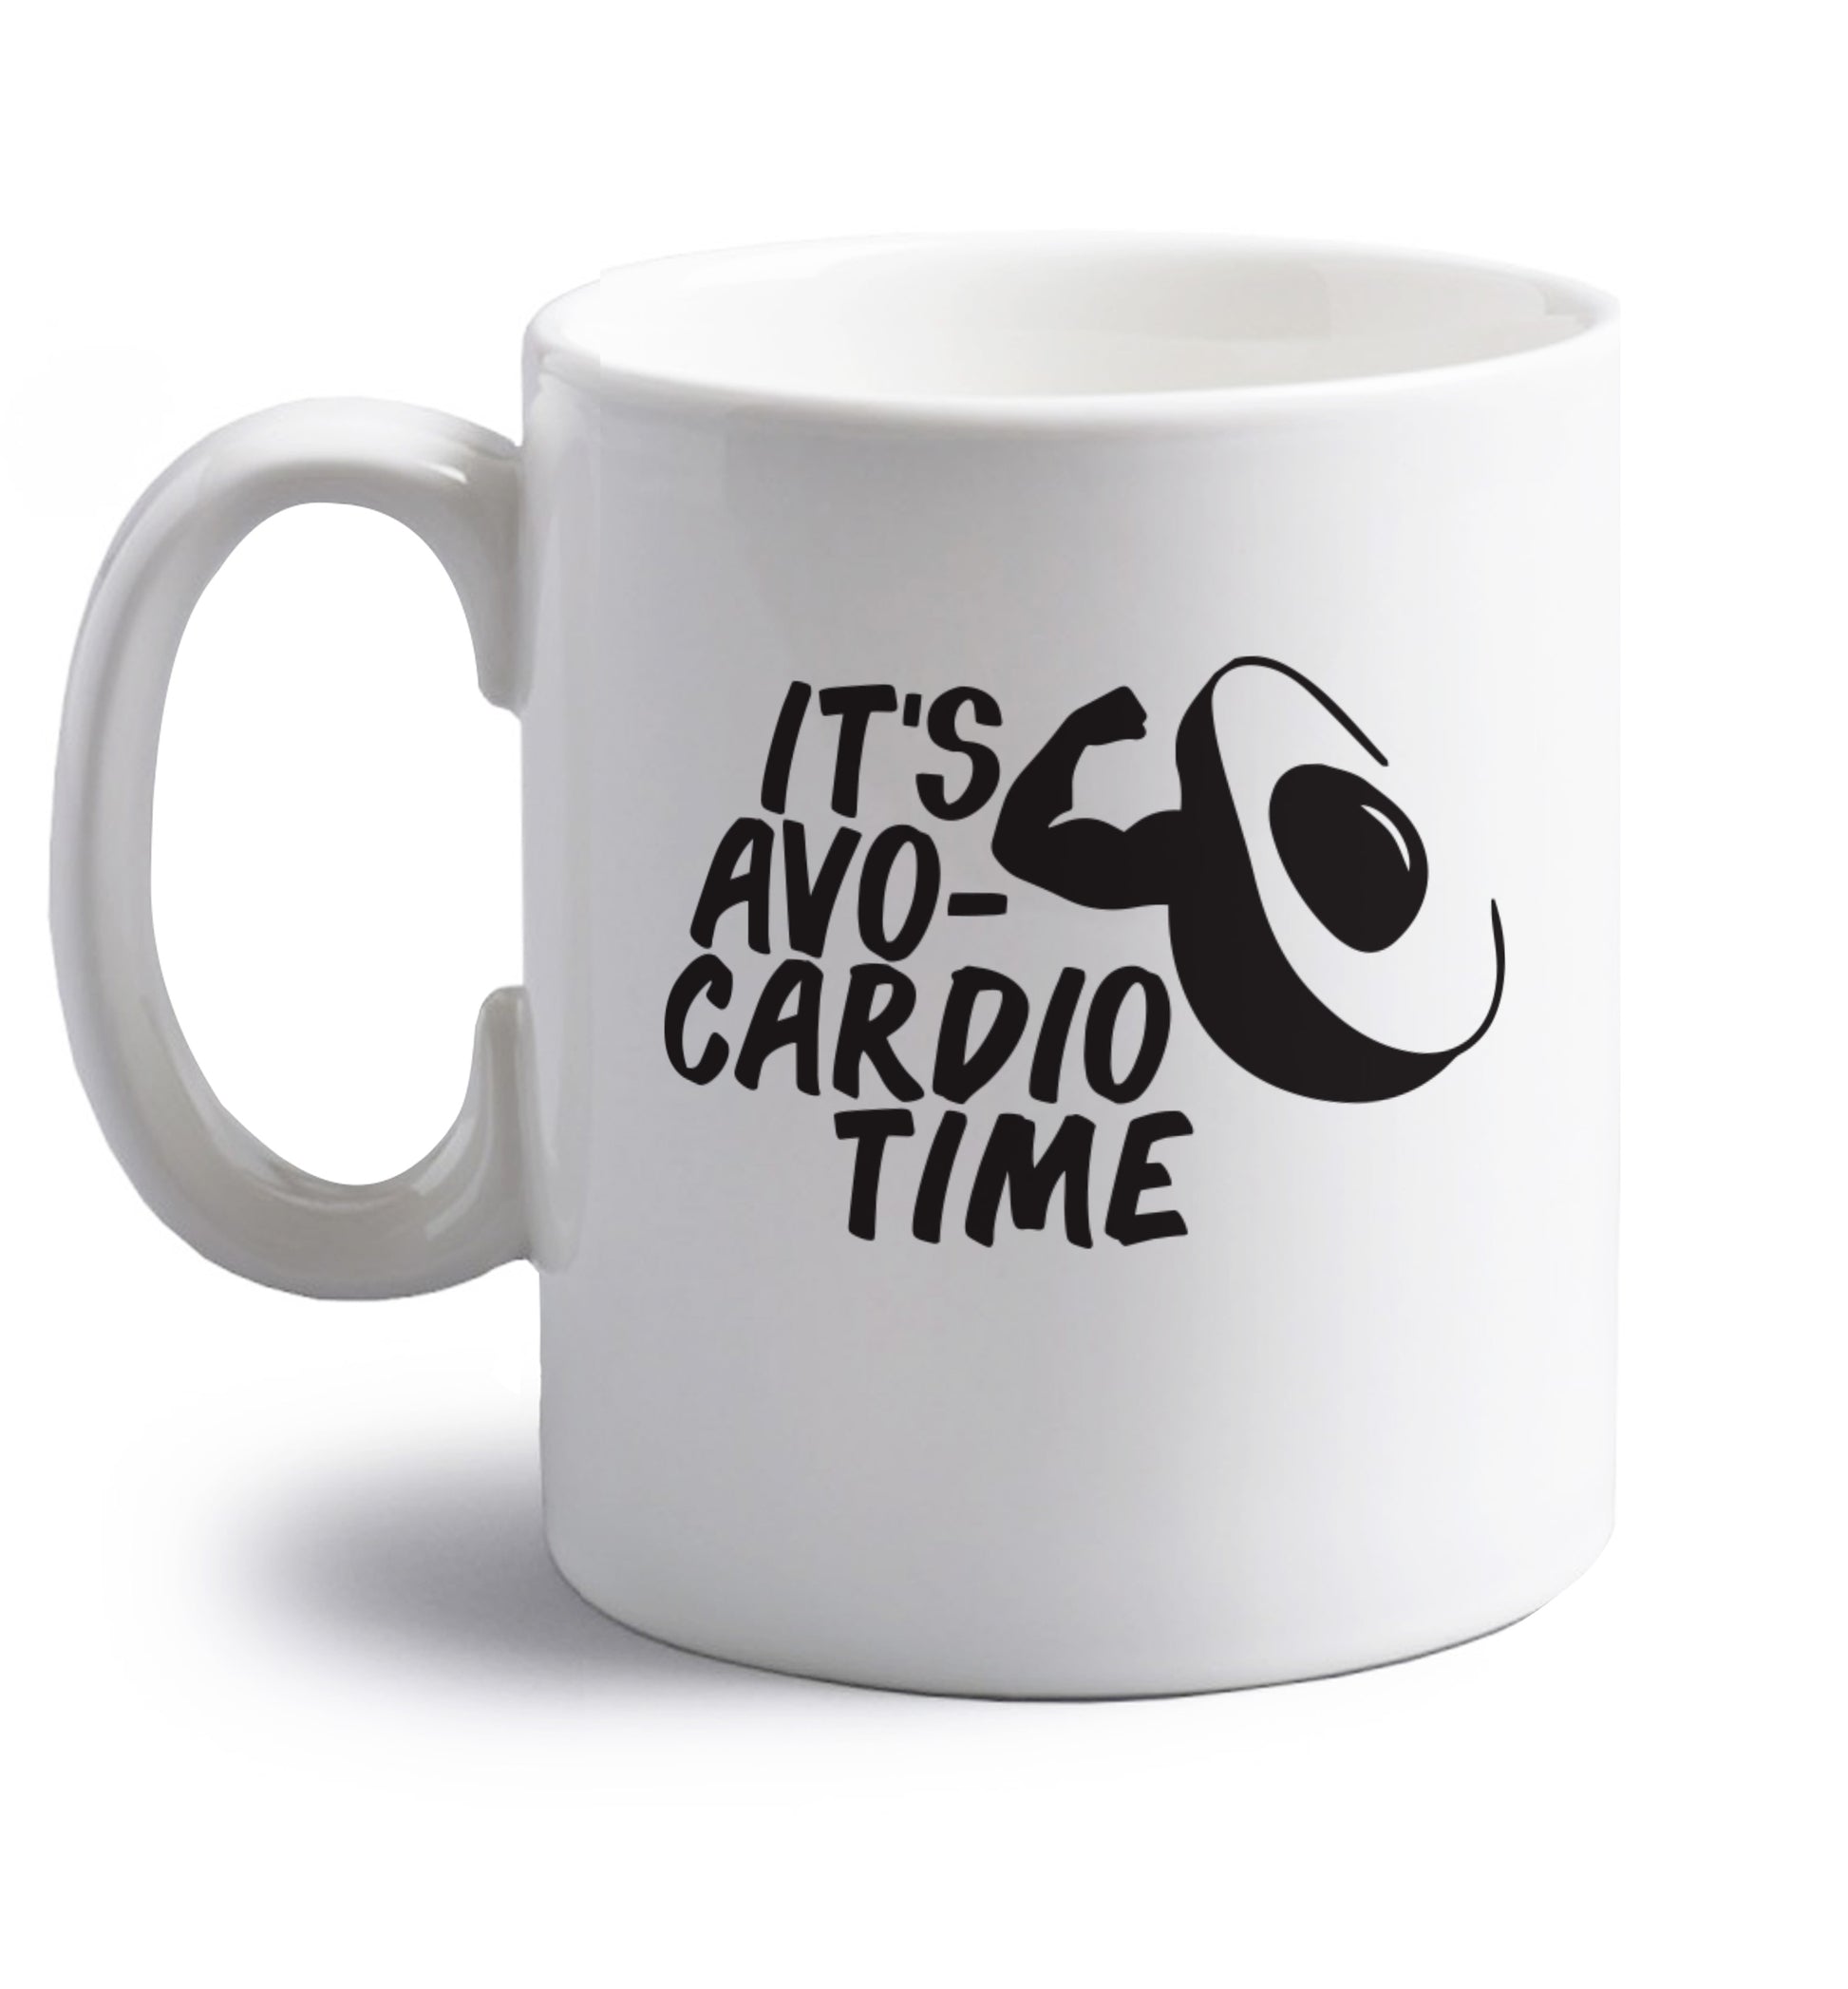 It's avo-cardio time right handed white ceramic mug 